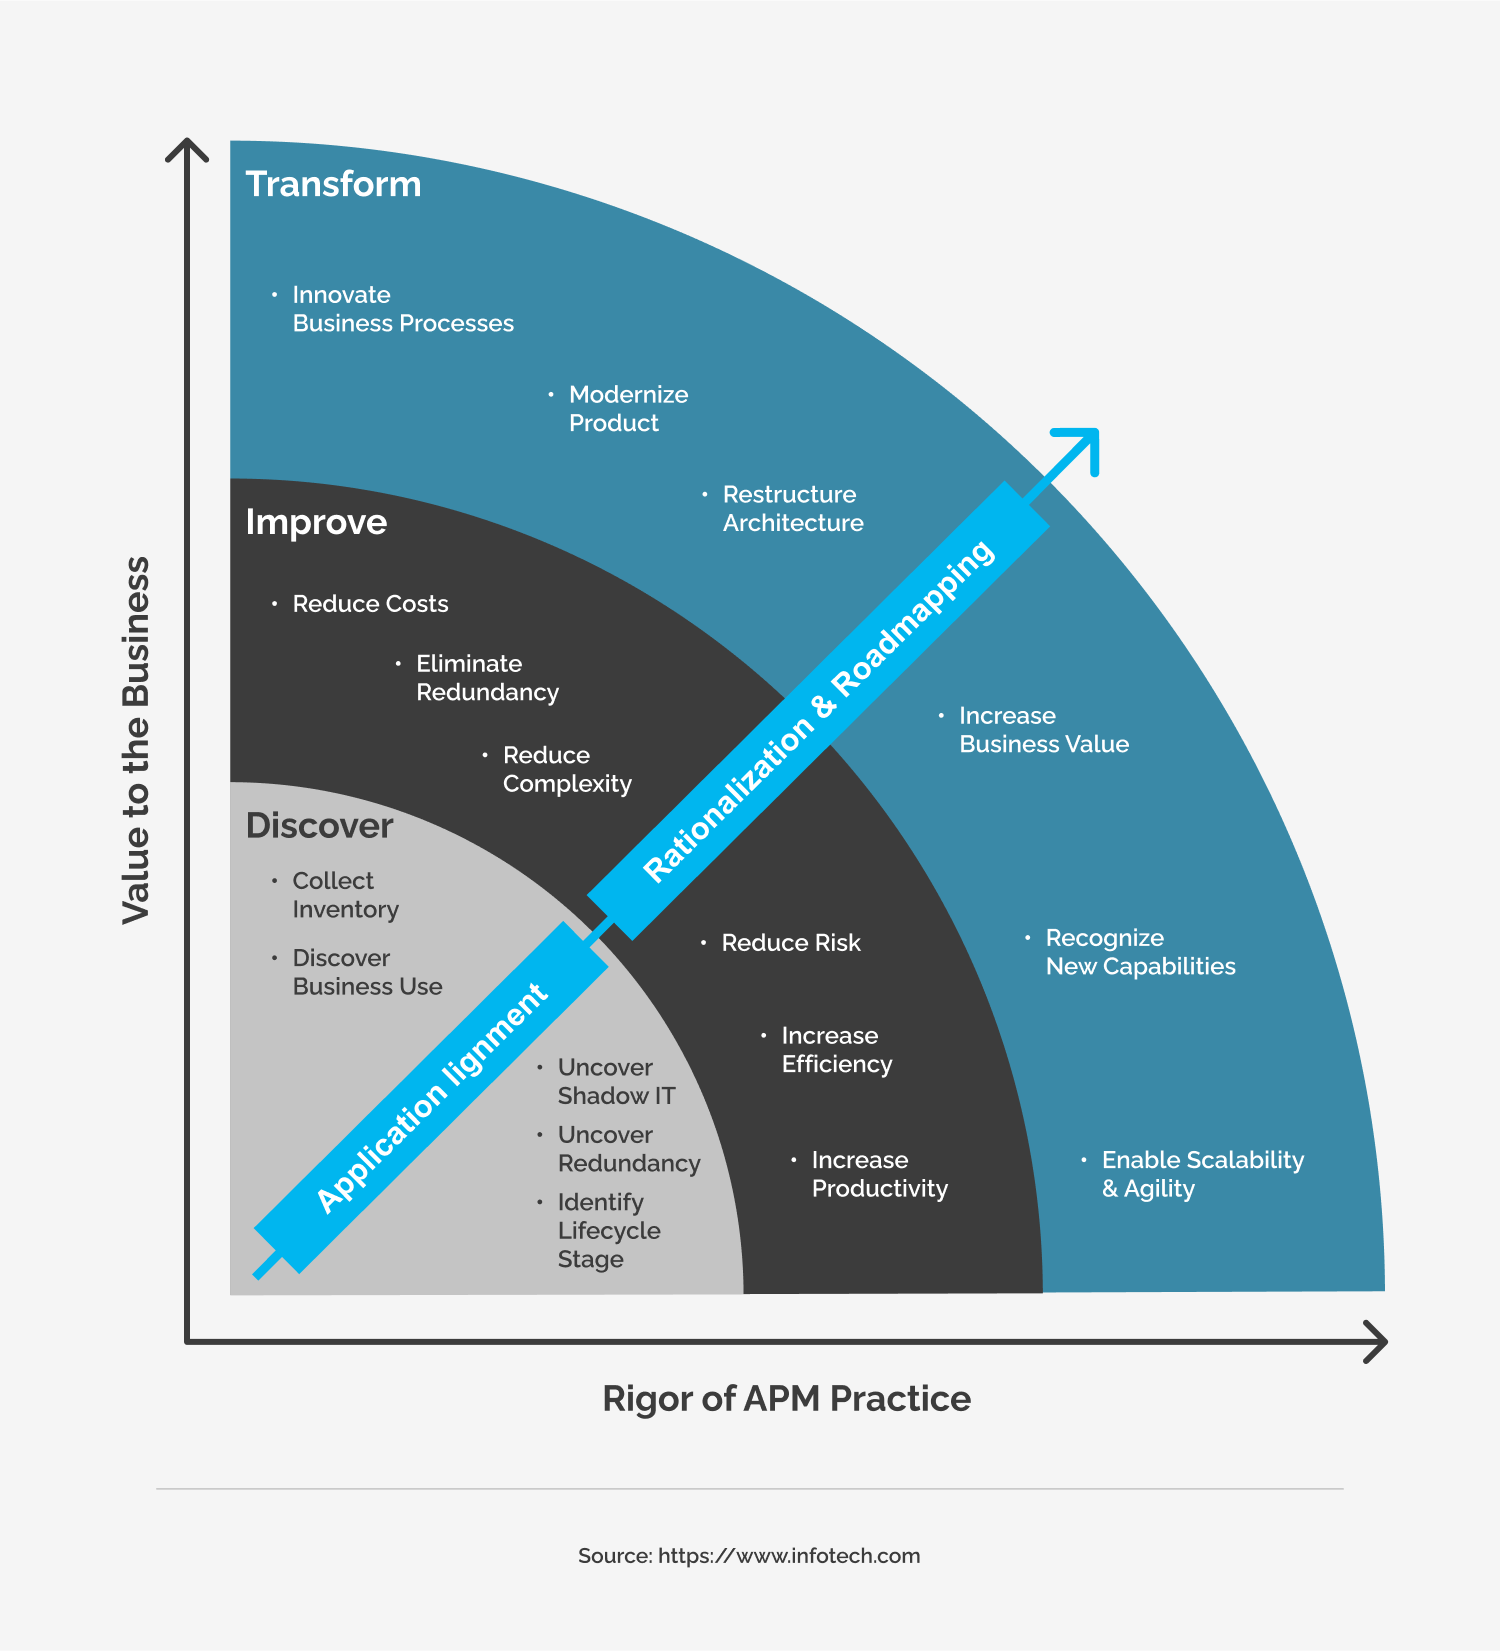 APM Application Rationalization